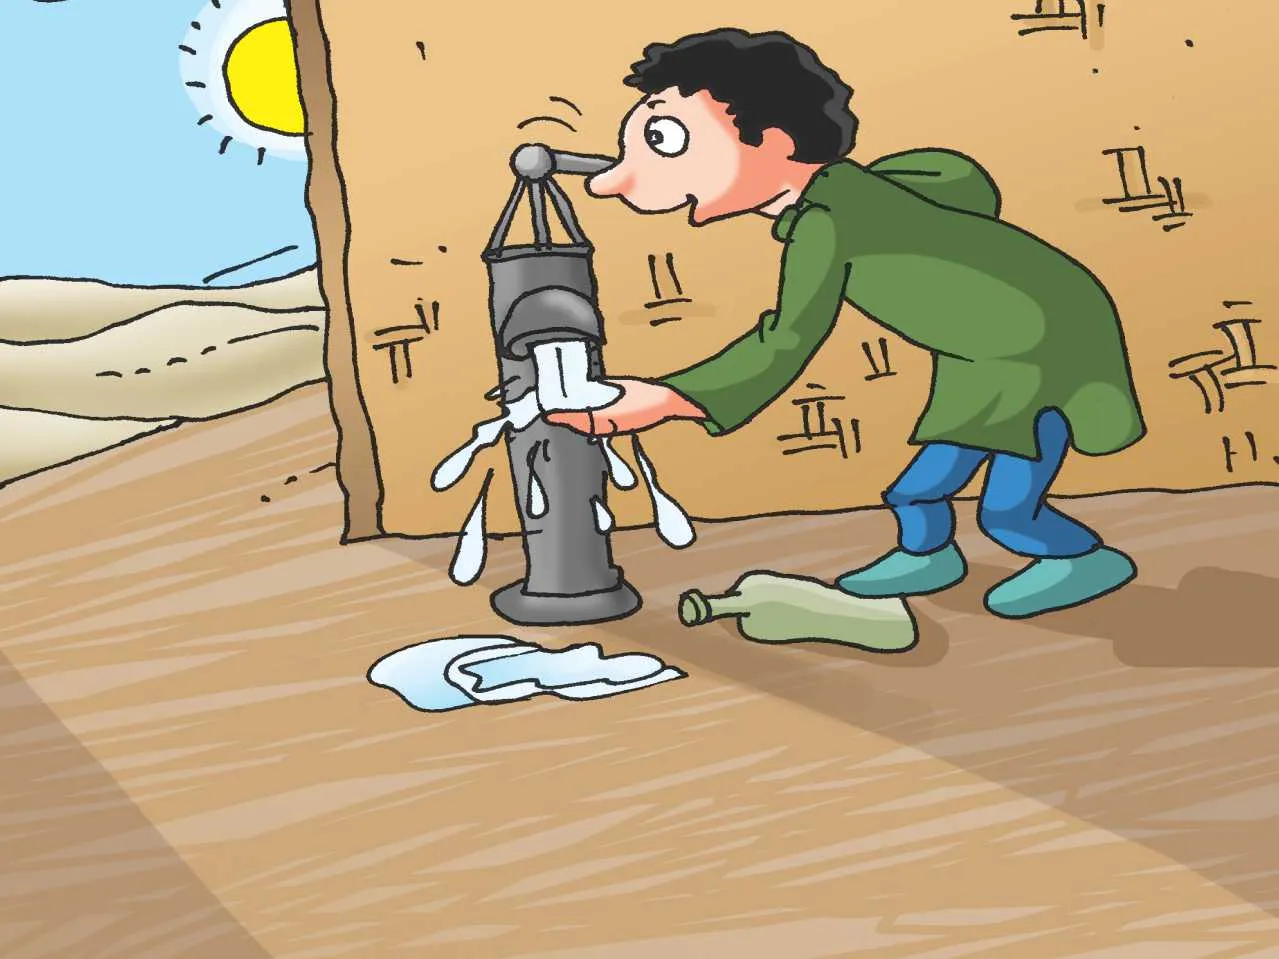 Man in desert with waterpump cartoon image